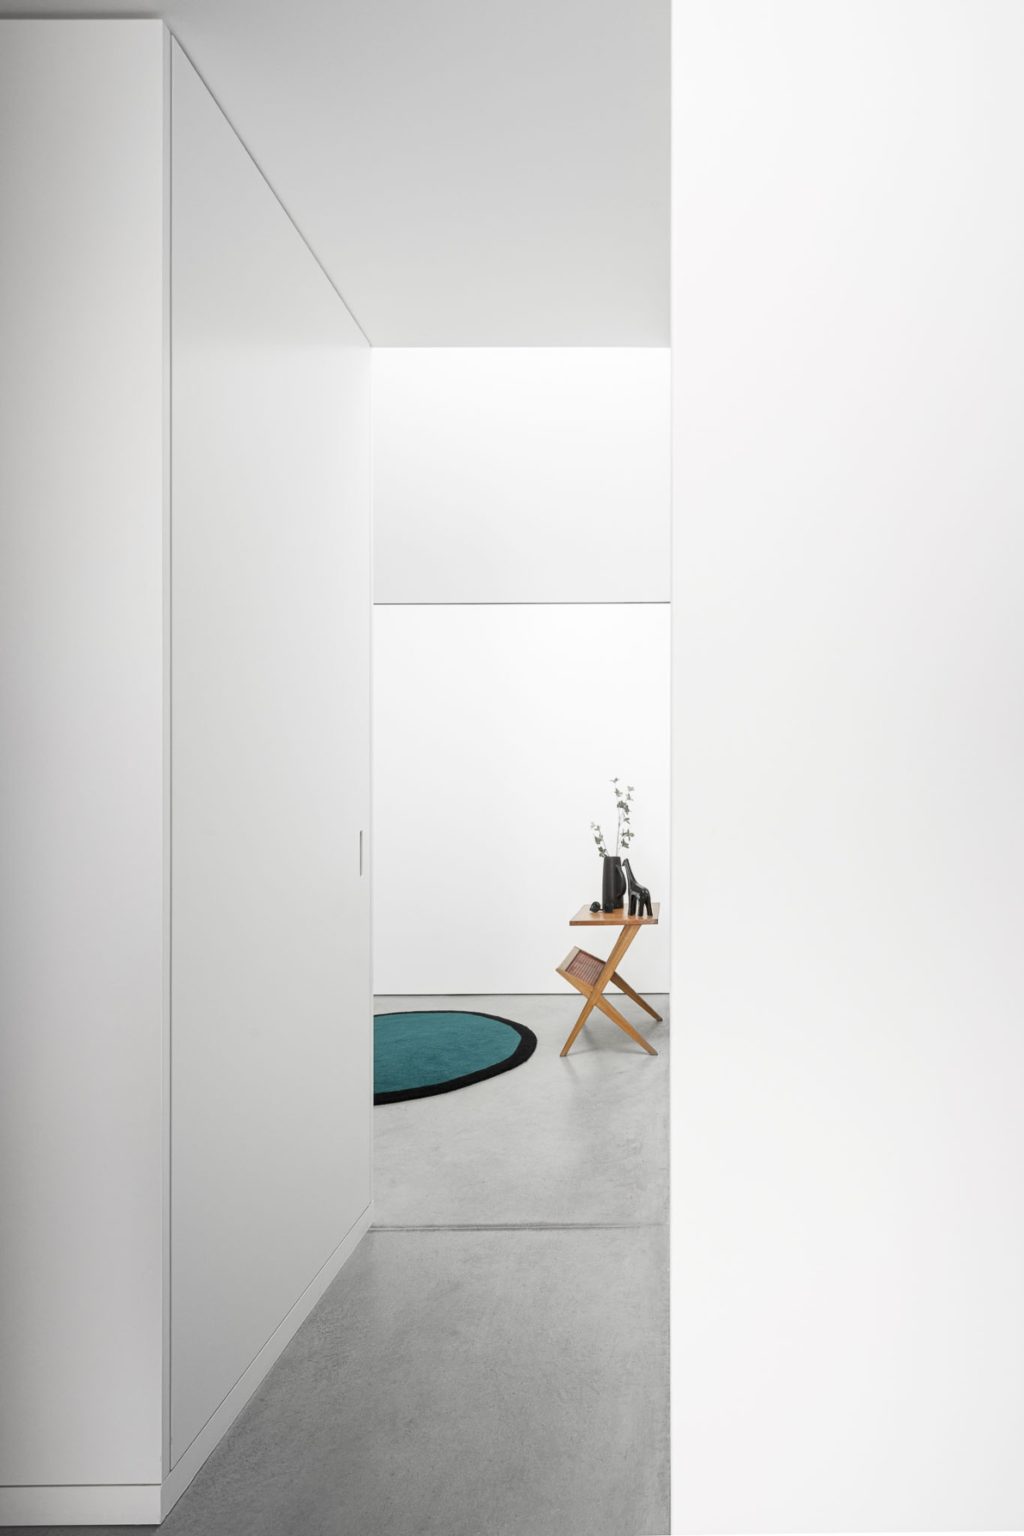 A Cozy Home Retreat in Sta Joana. NU.MA architects. Ph Ivo Tavares Studio